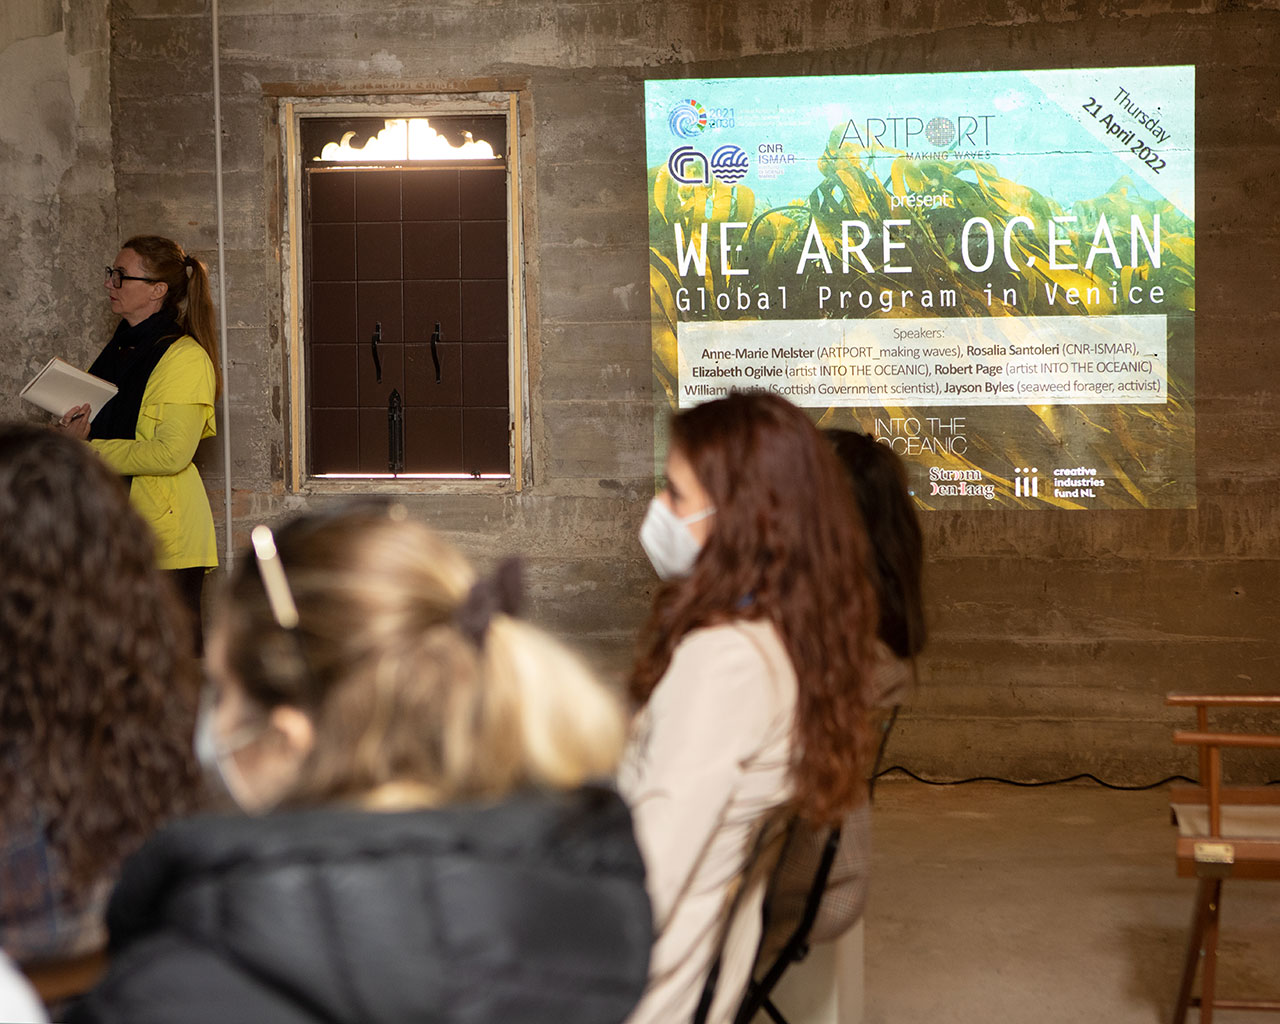 We-are-ocean-venice-2022-artport-making-waves-workshop-b